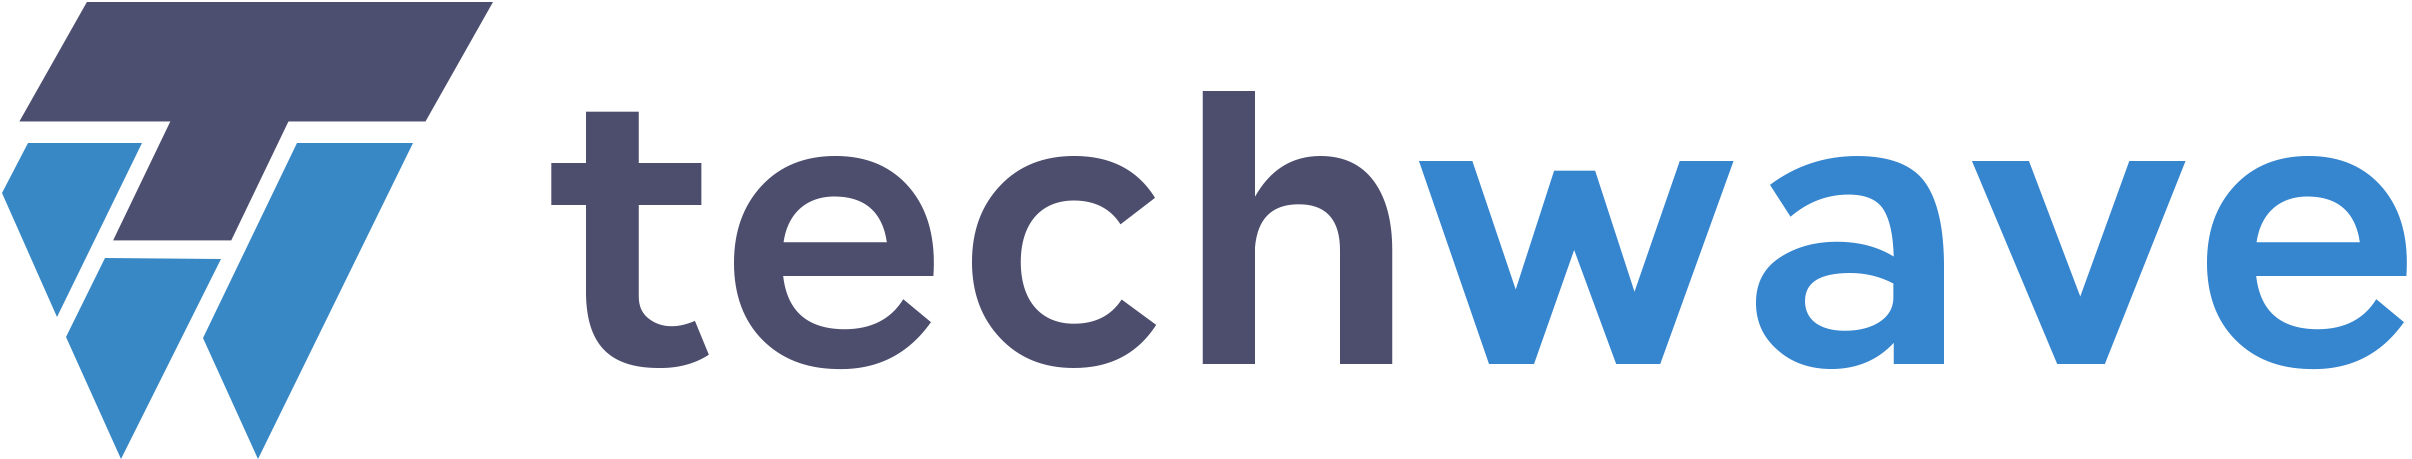 Techwave Logo with Logotype